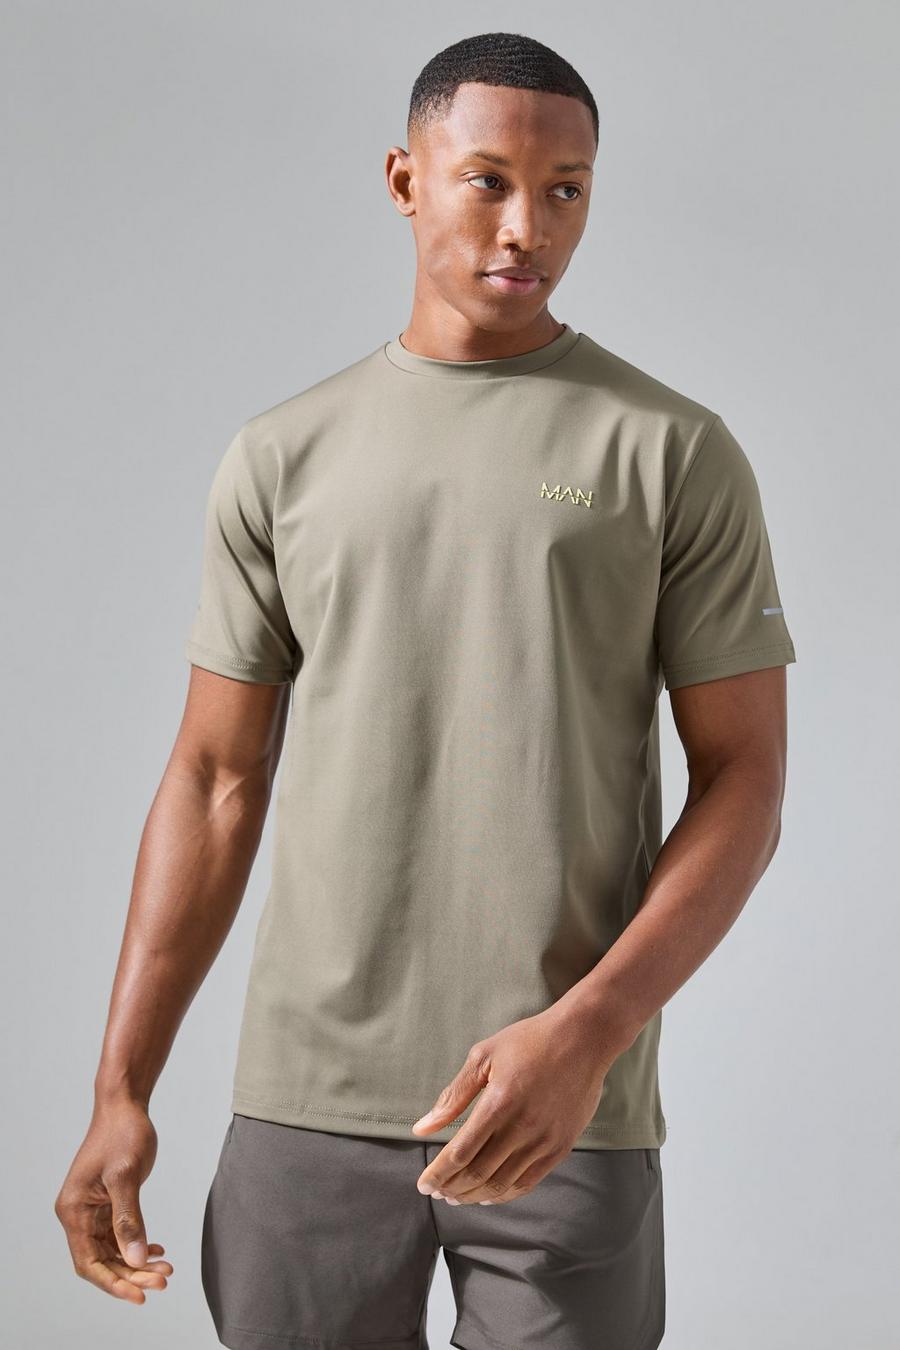 Man Active Performance T-Shirt, Khaki image number 1